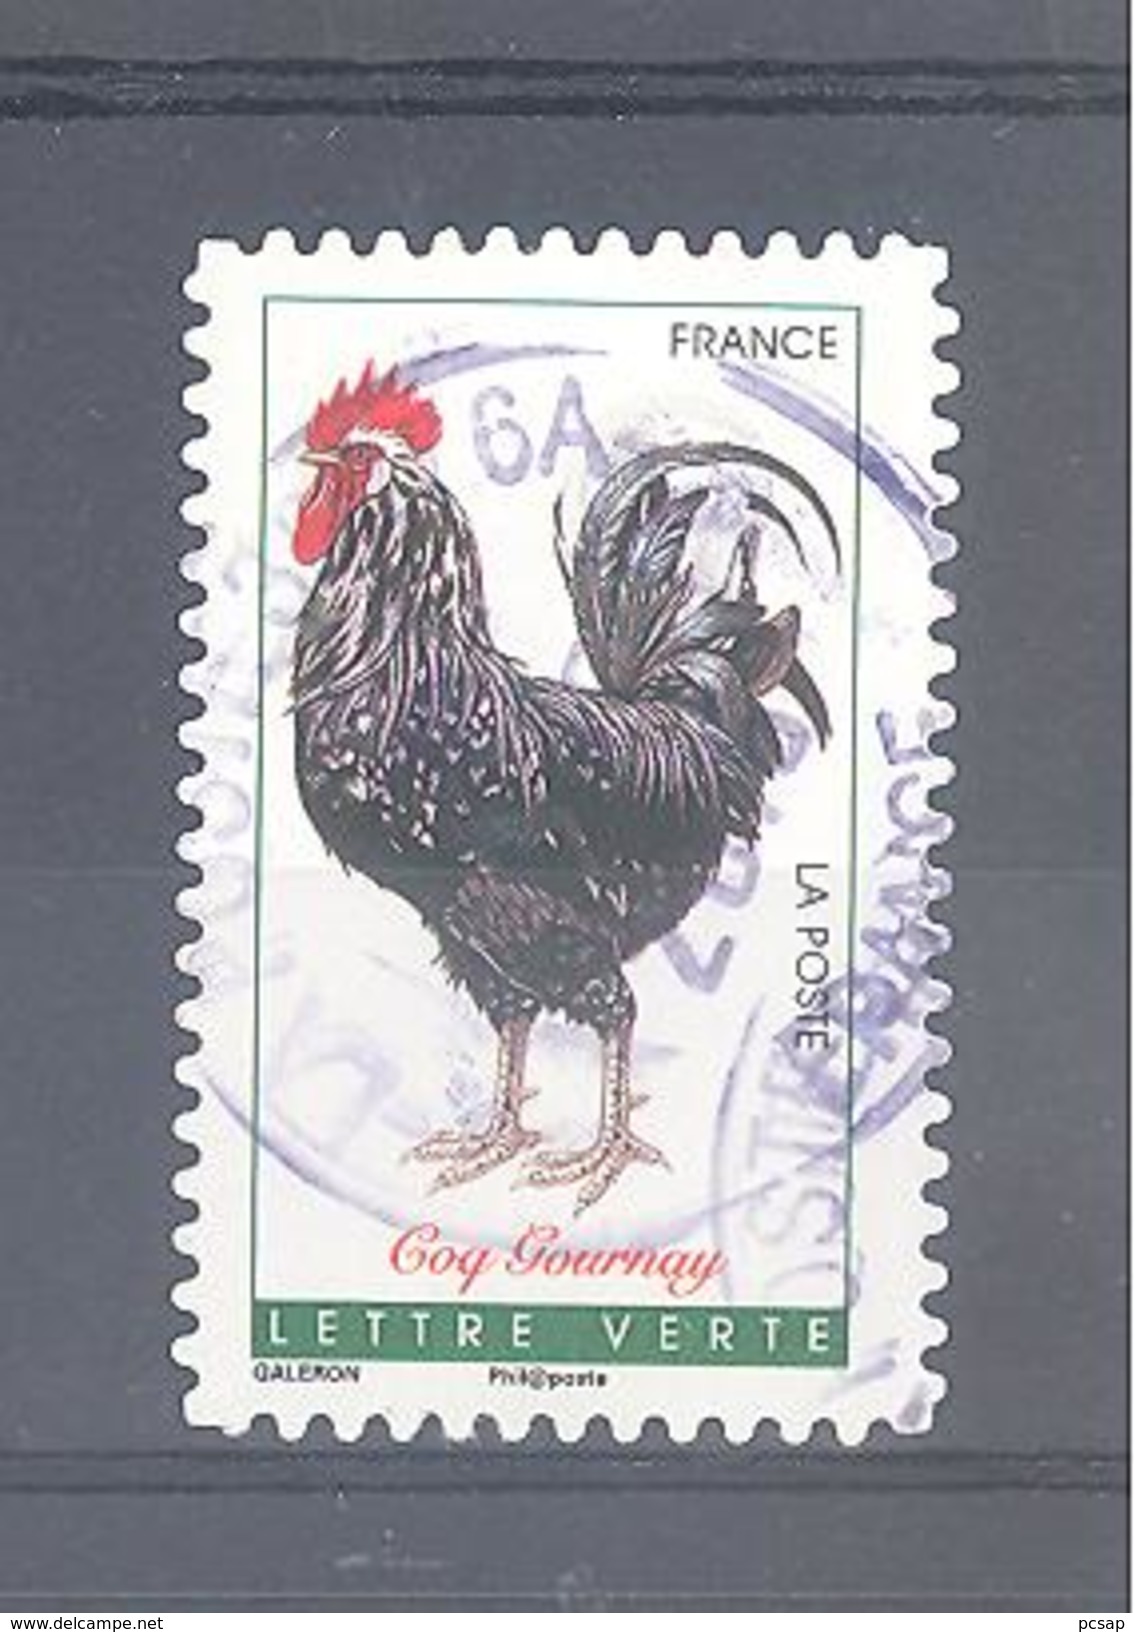 France Autoadhésif Oblitéré N°1247 (Coq Gournay) (cachet Rond) - Used Stamps